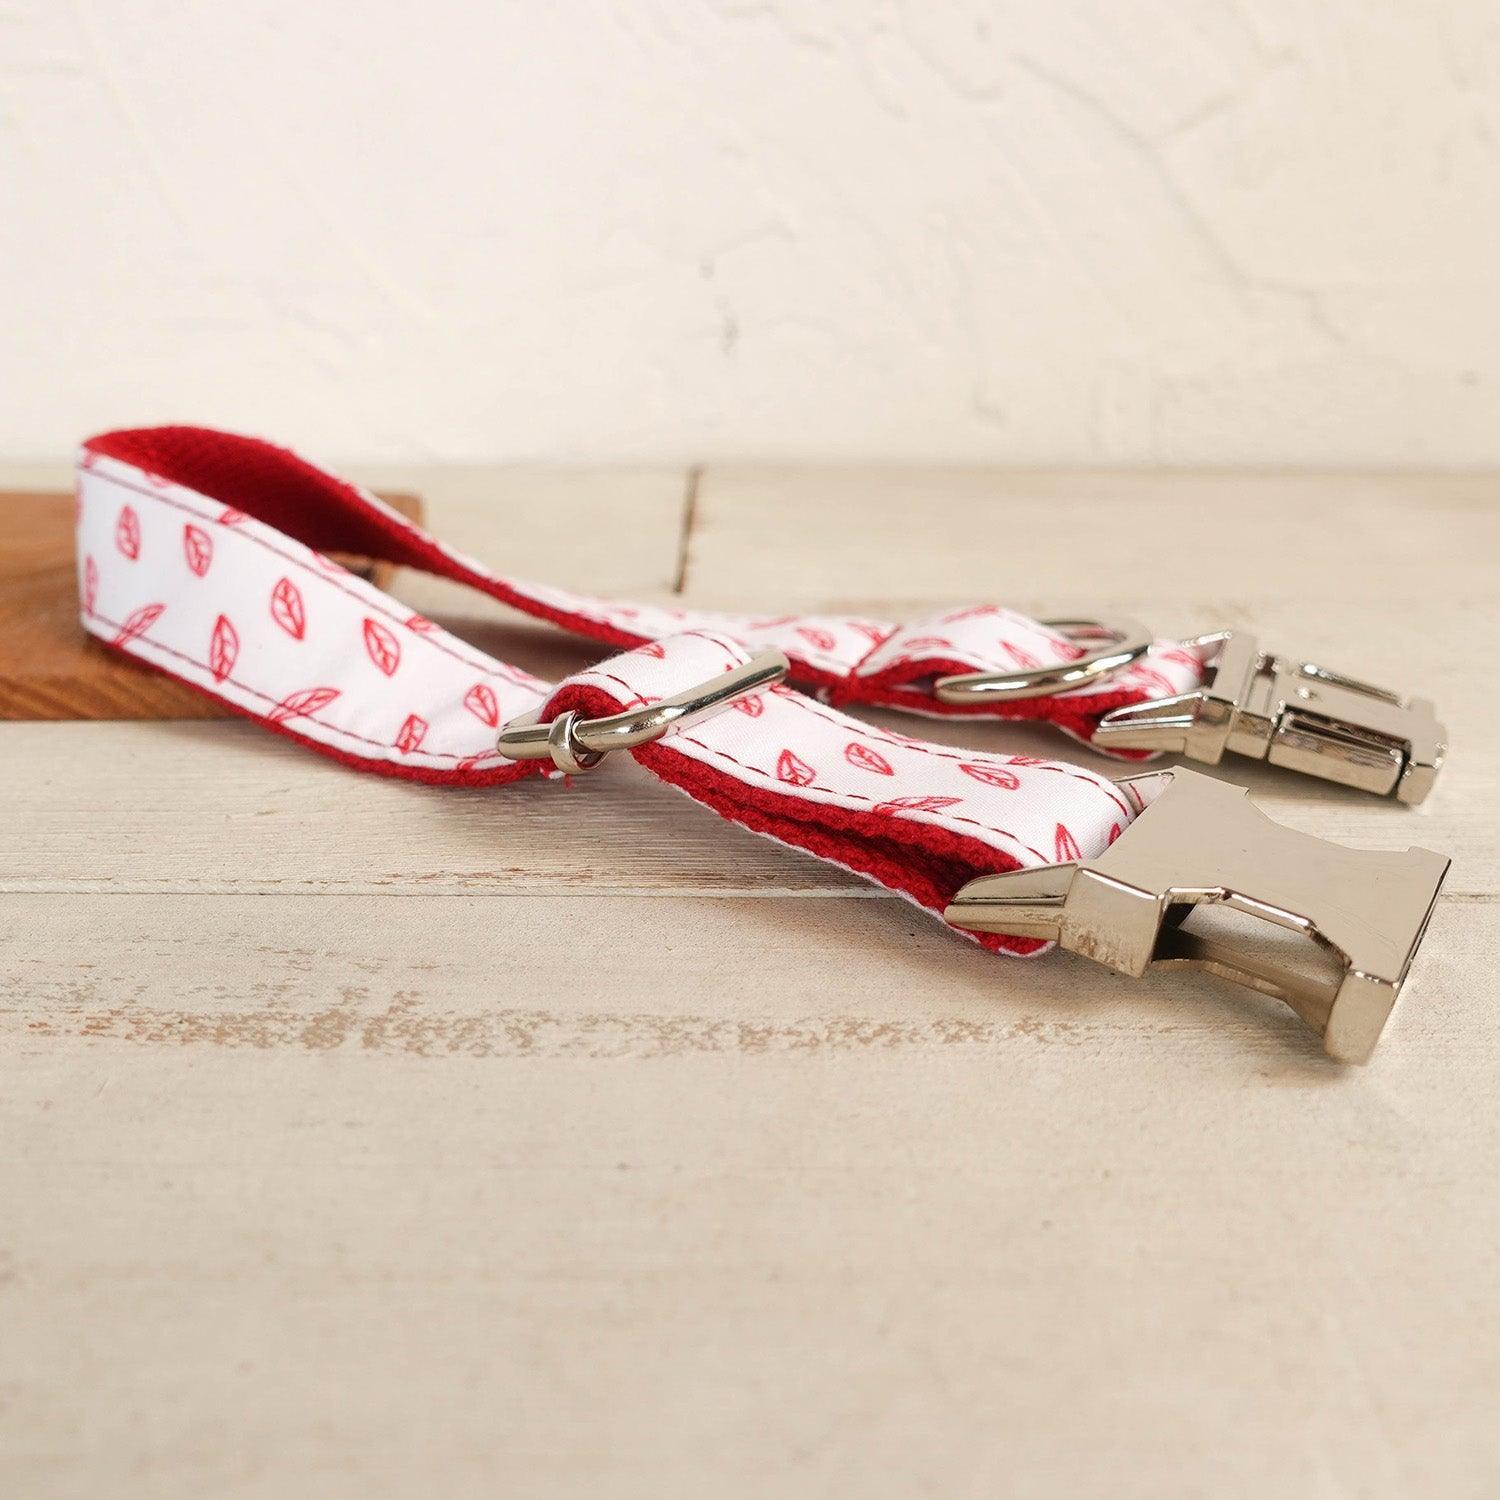 Red Leaf White Personalized Dog Collar Set - iTalkPet